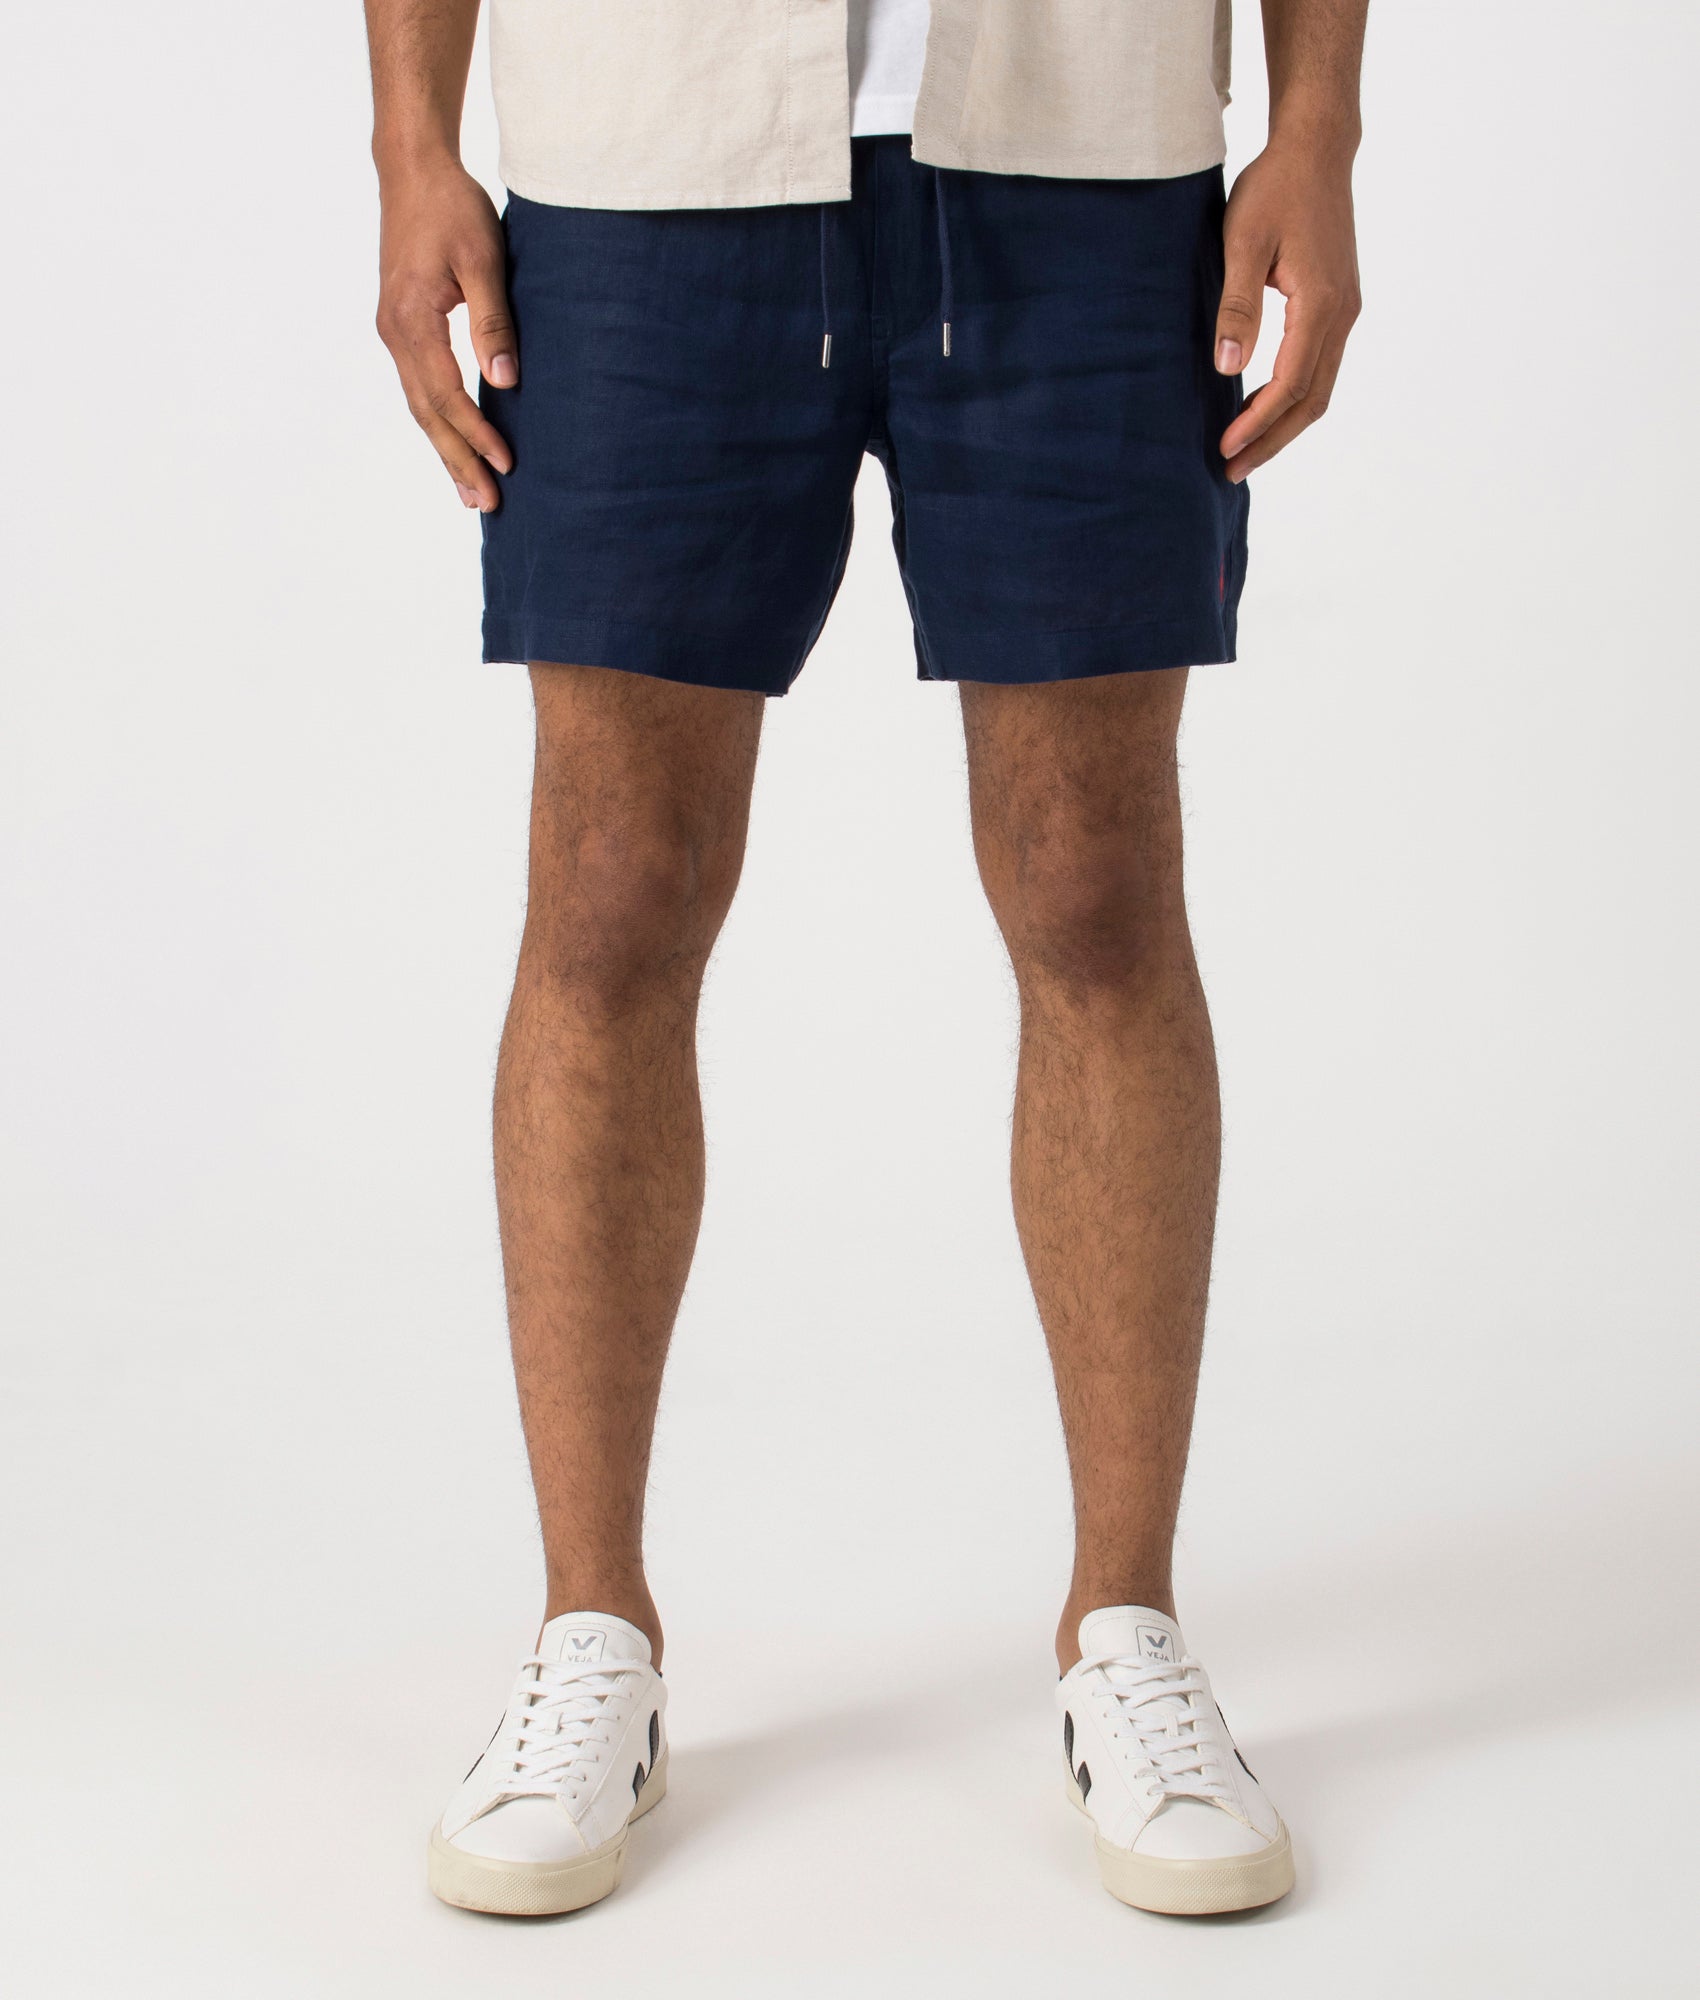 Polo Ralph Lauren Mens Classic Fit Prepster Linen Shorts - Colour: 001 Newport Navy - Size: Small